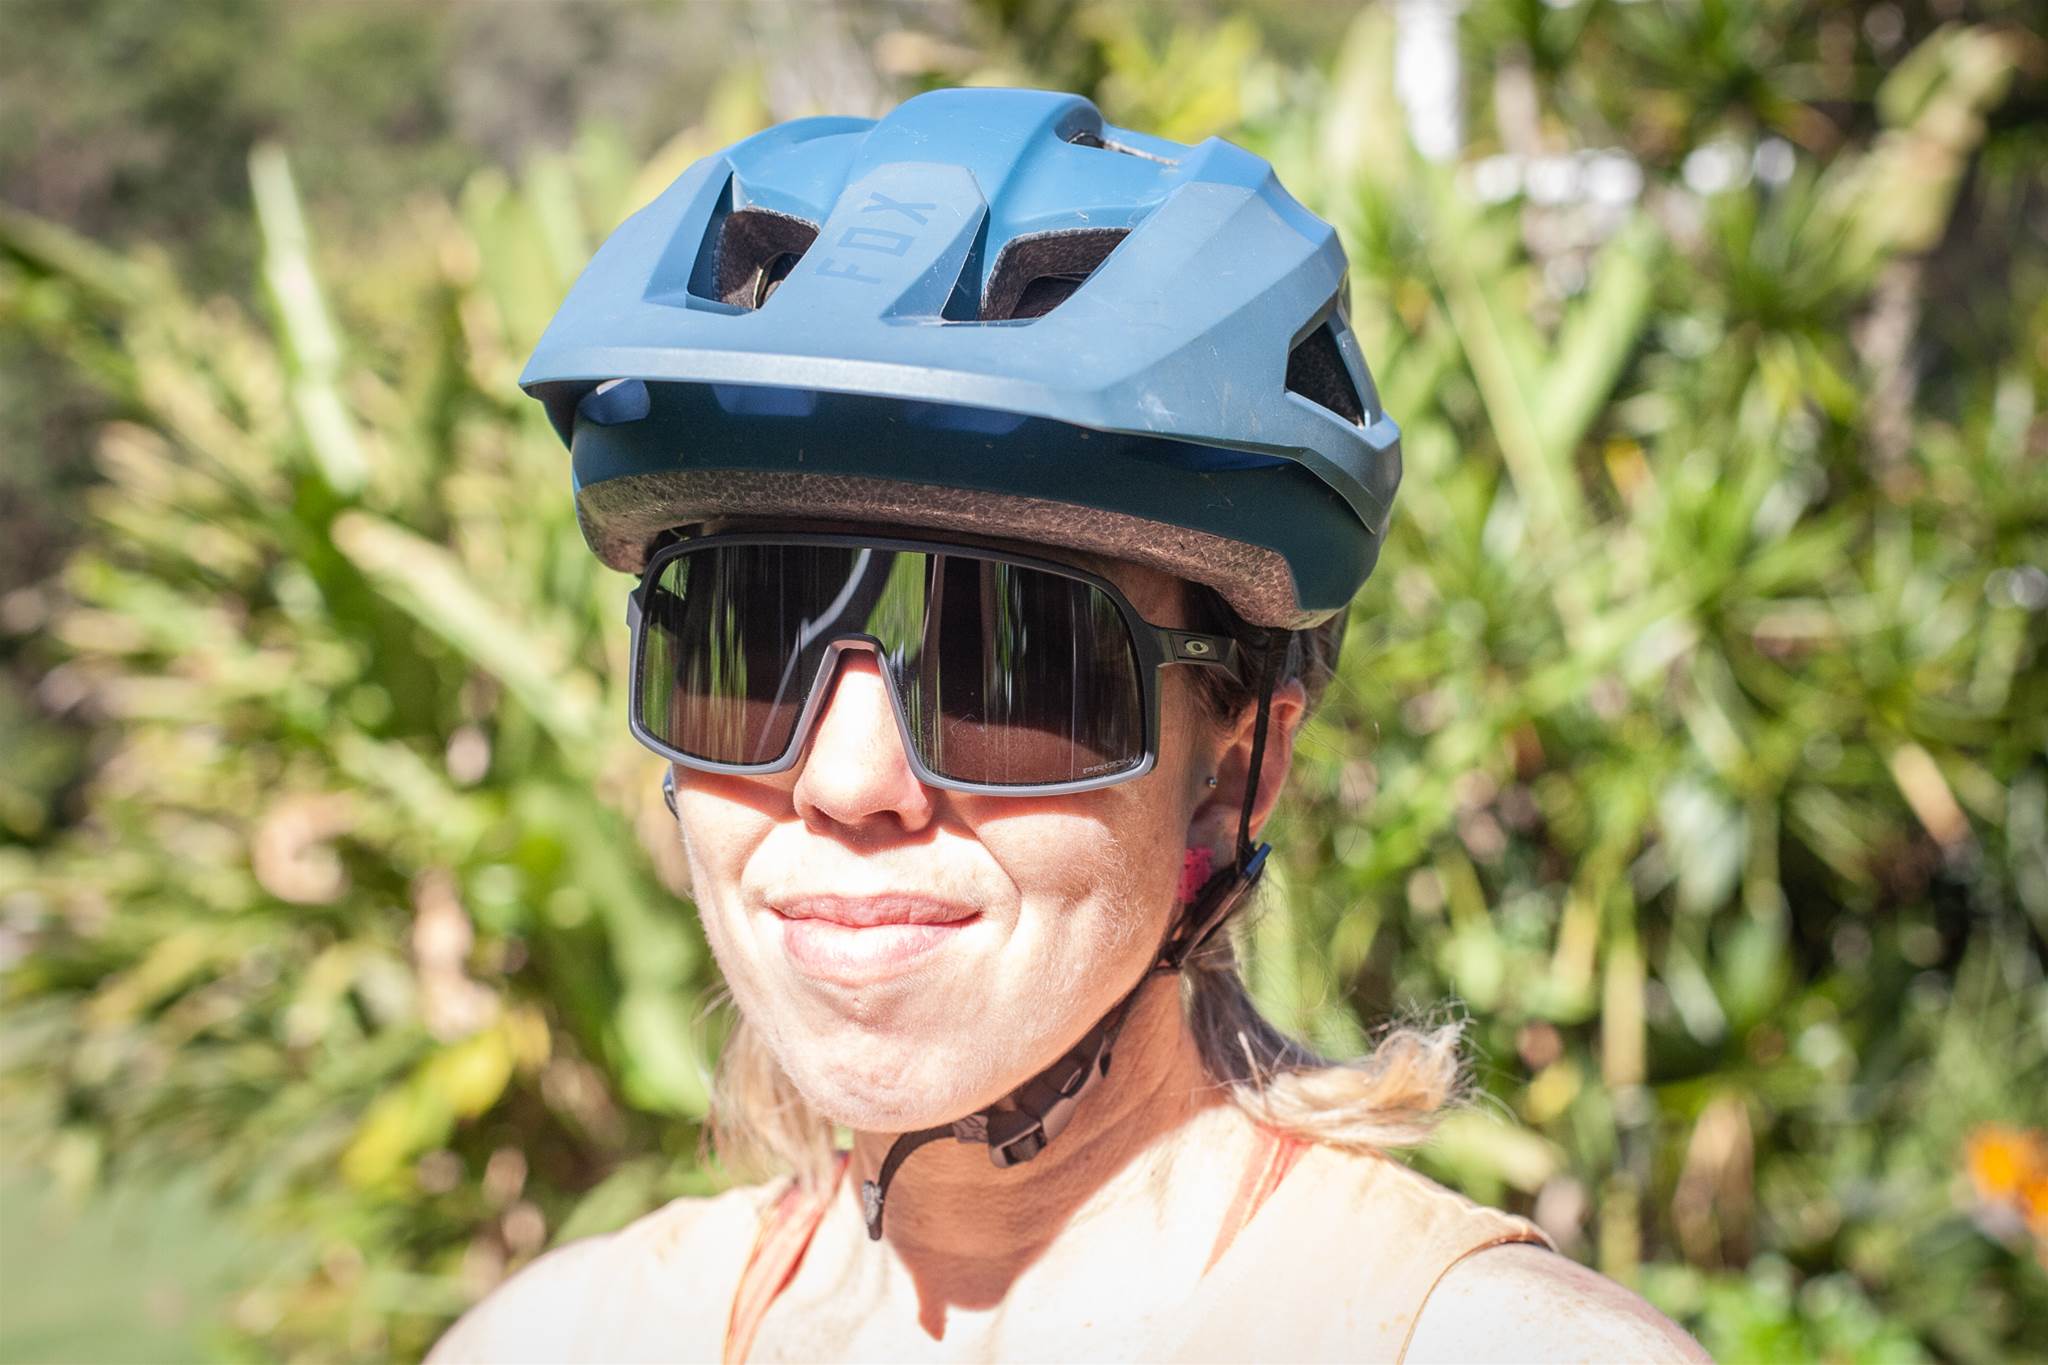 Sunglasses group test for mountain biking